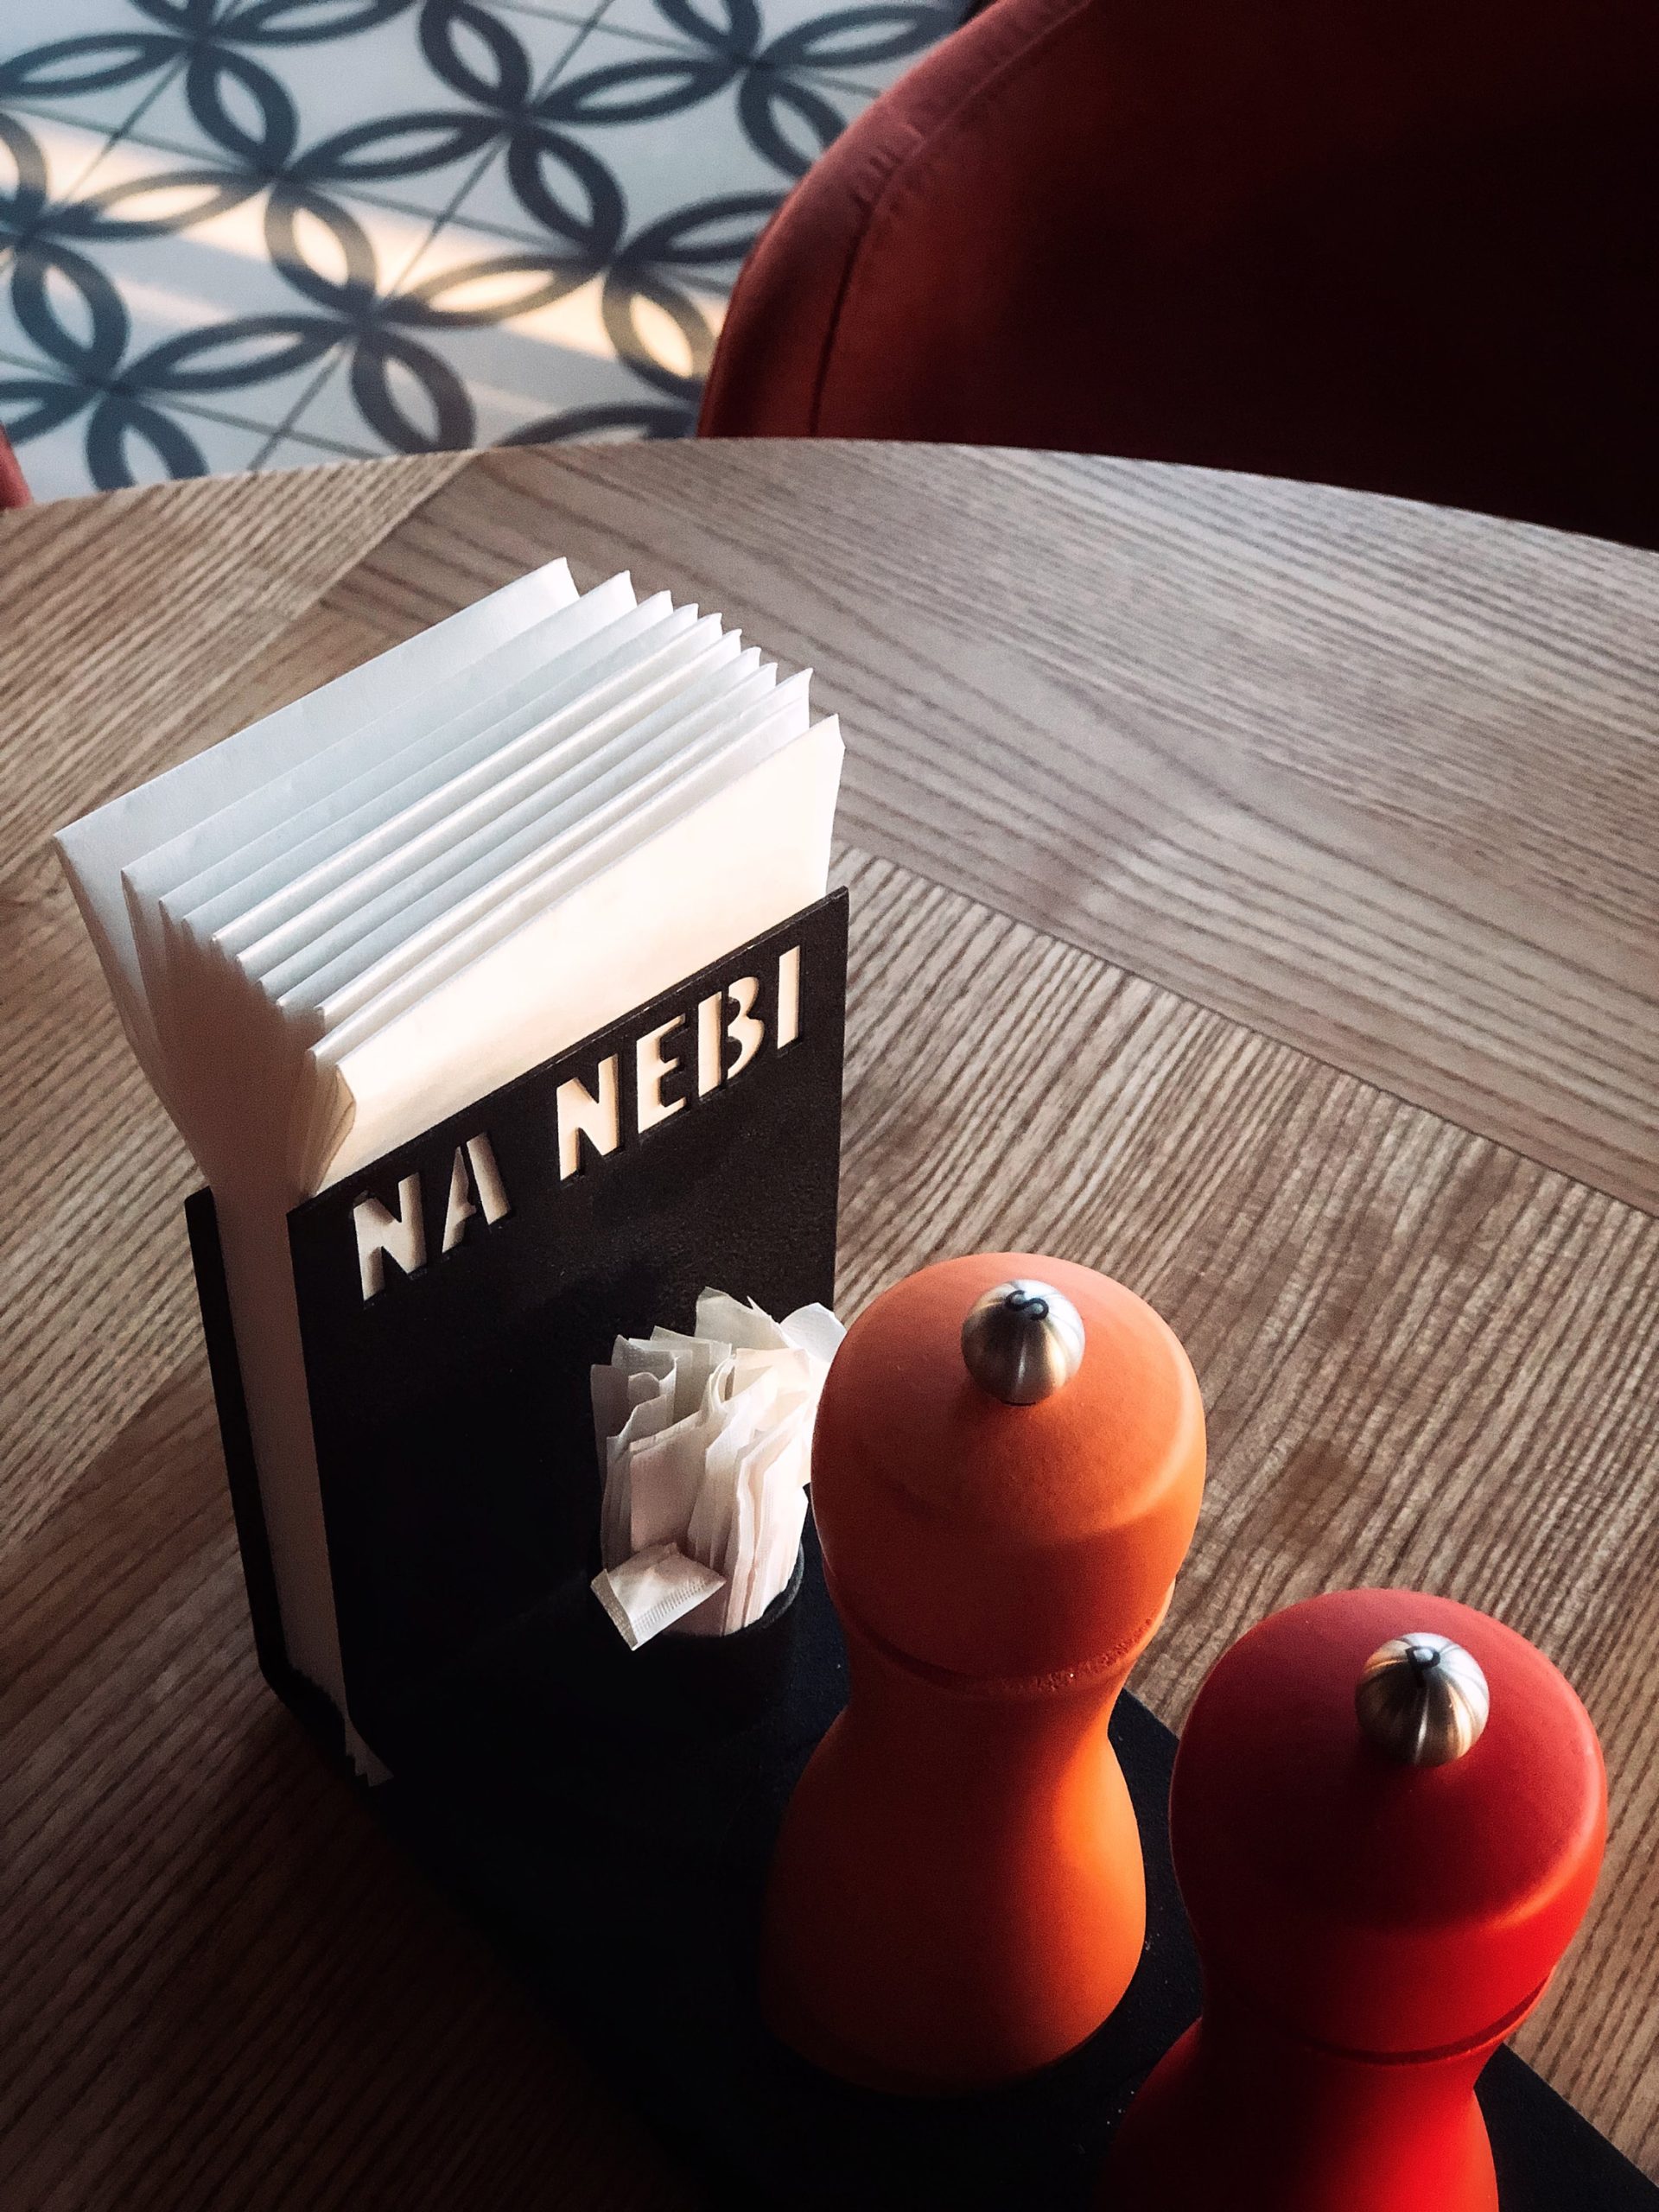 nanebi_restaurant_details_elements (25)